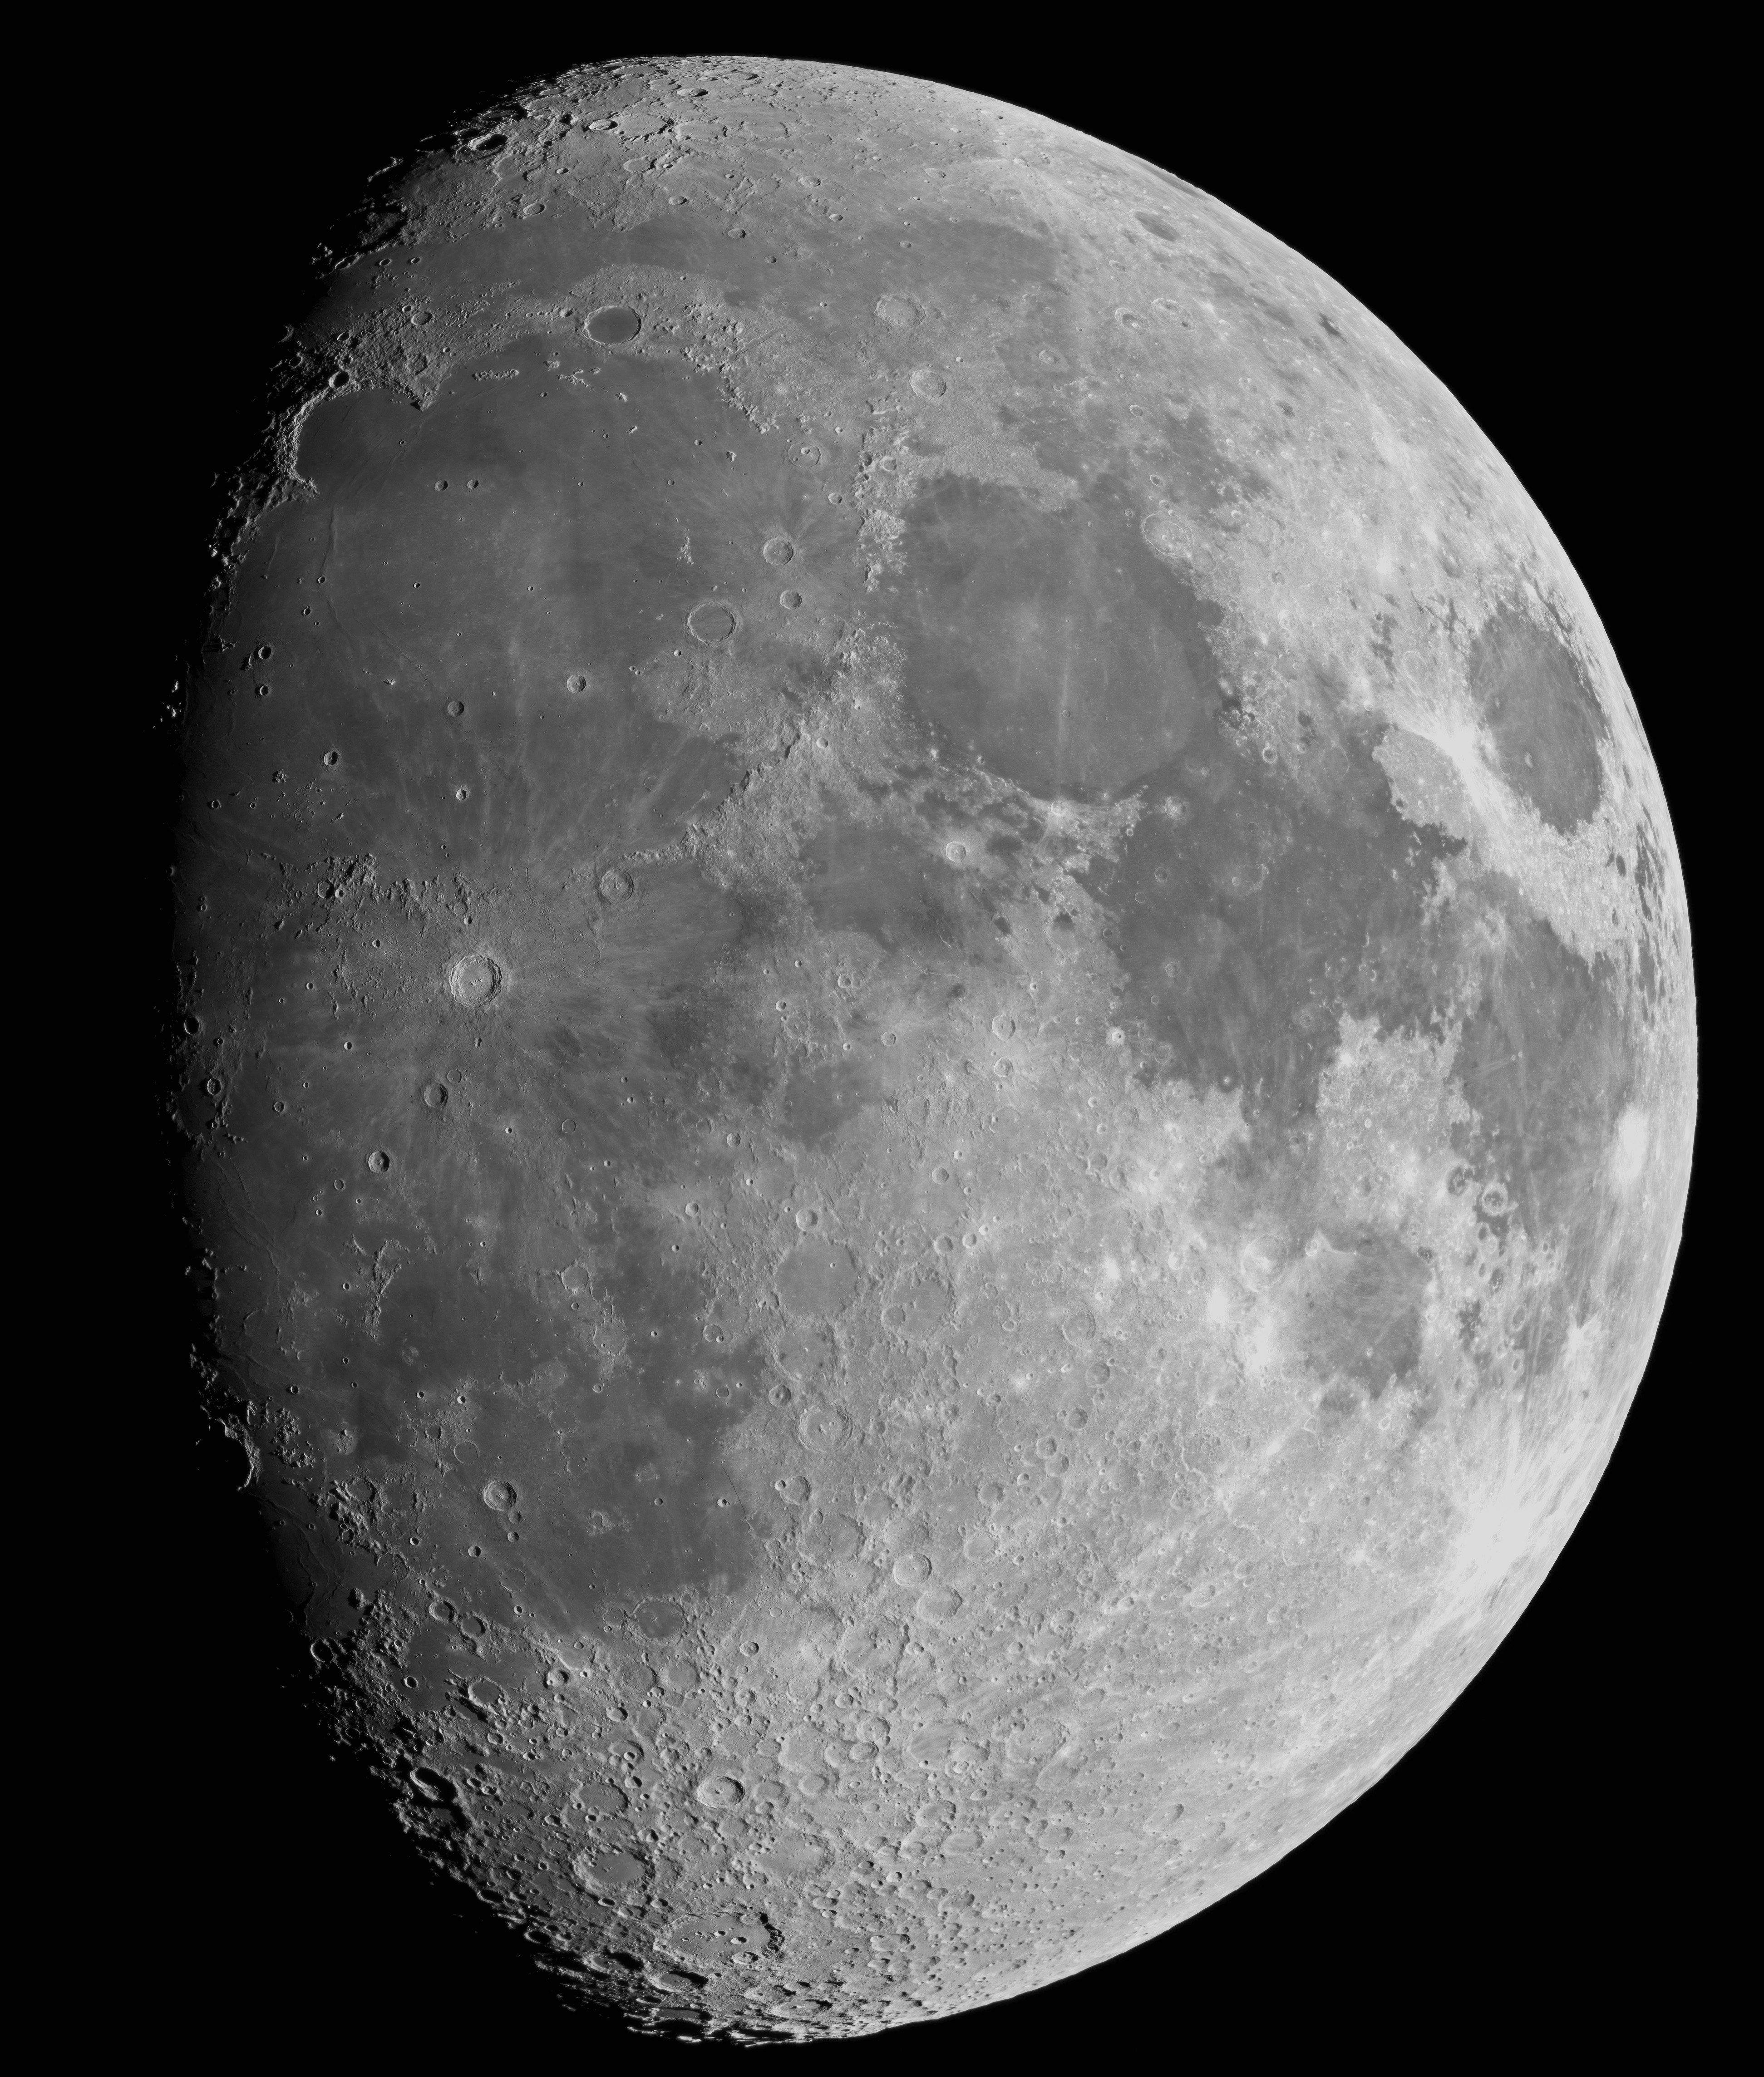 Moon mosaic 18 Mp - 107 images - 03-03-2012